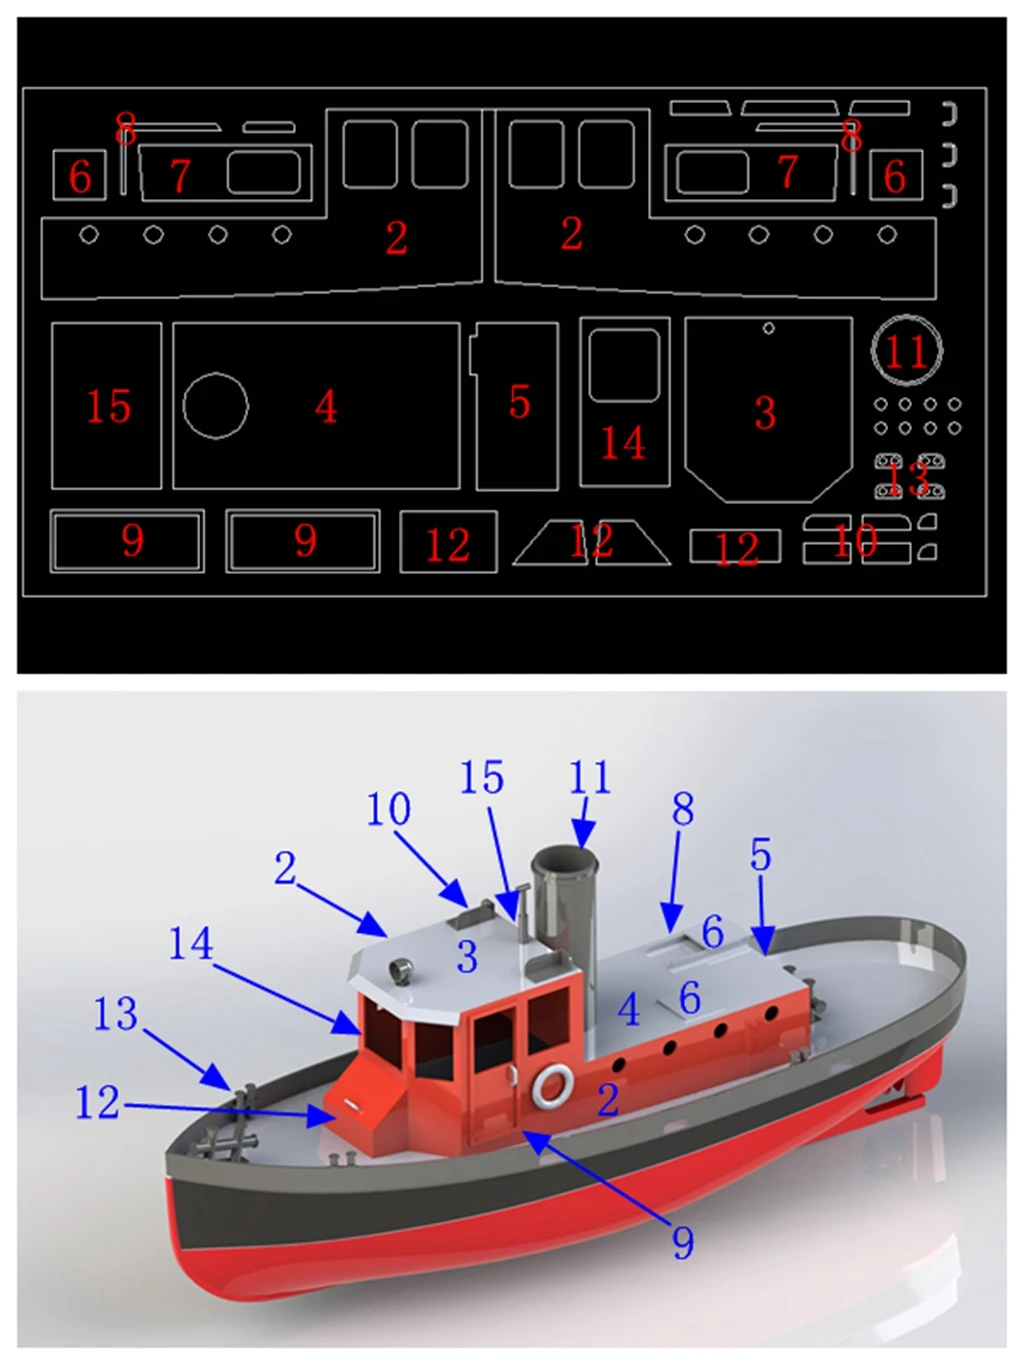 Remote Control Model Port, Assembled Model Toy, Work Boat Lifeboat